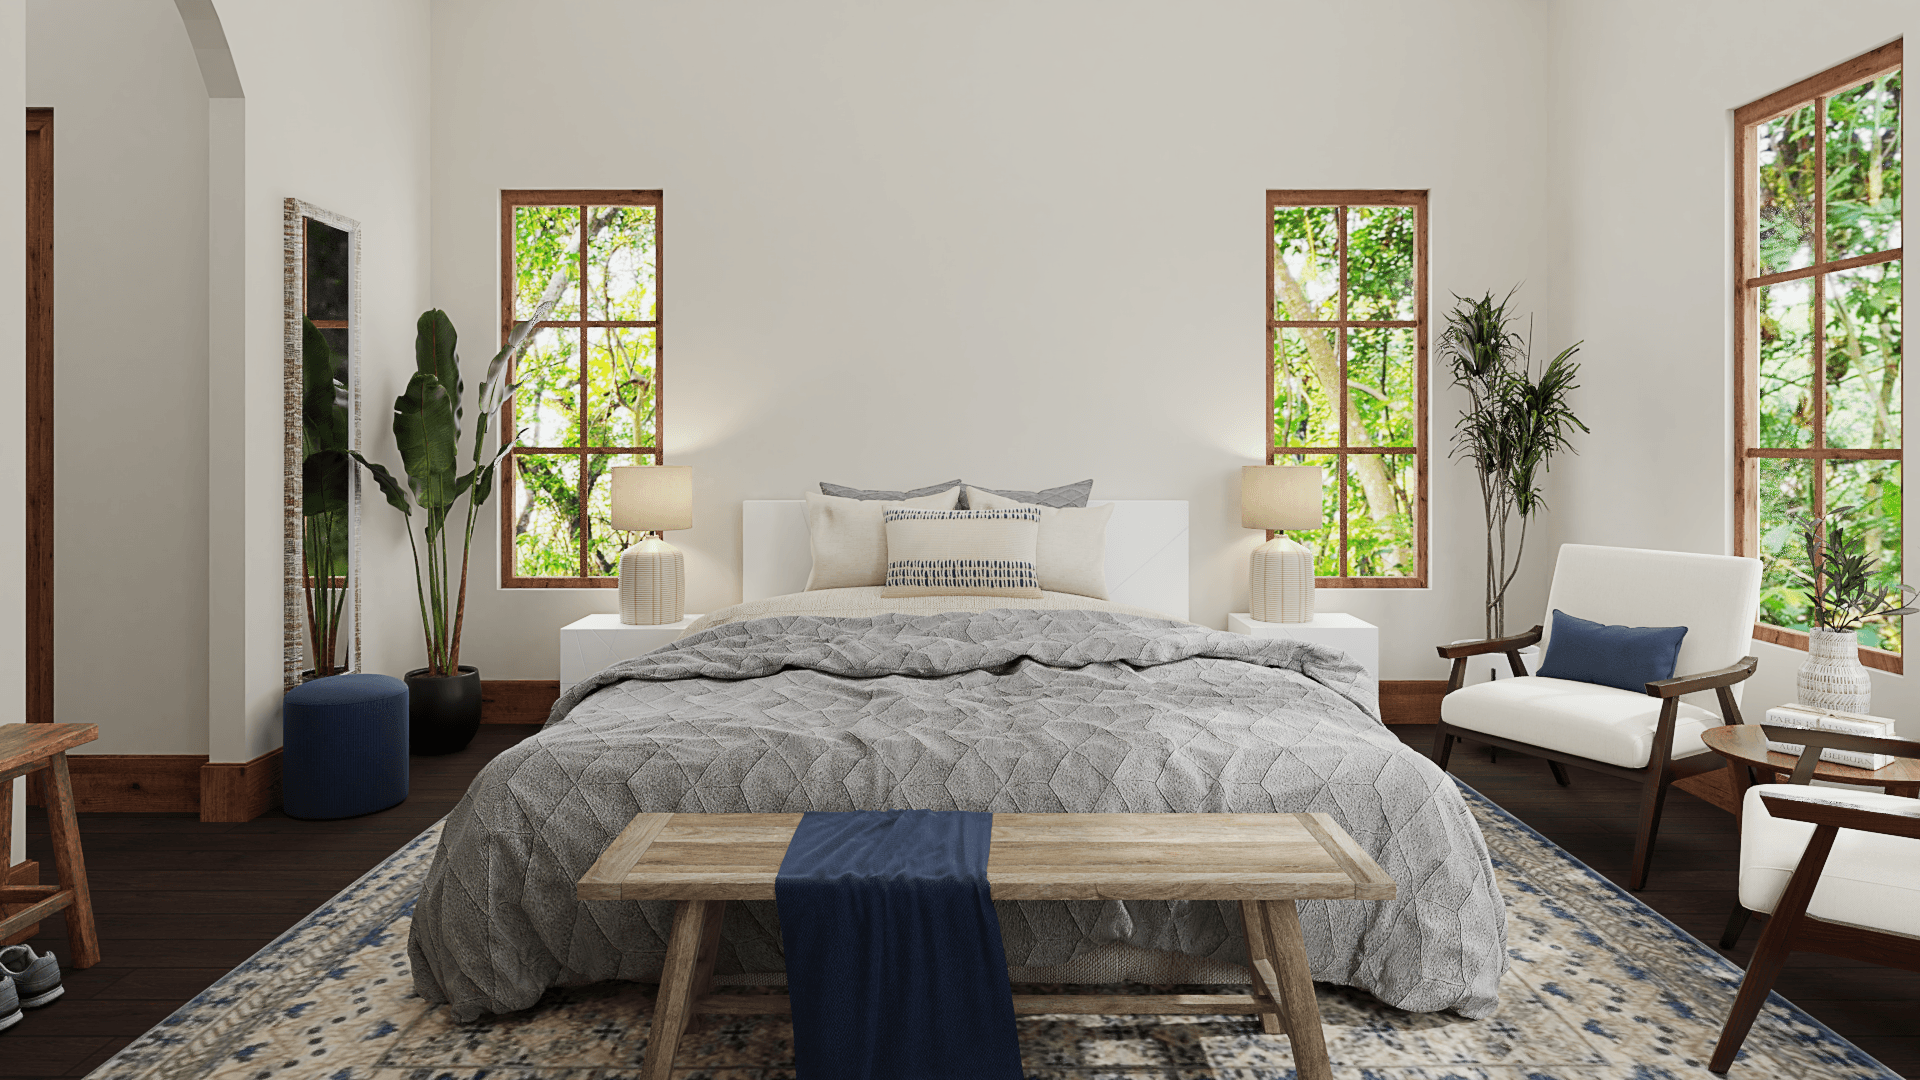 Cozy & Bright: A Mid-Century Modern Bedroom 